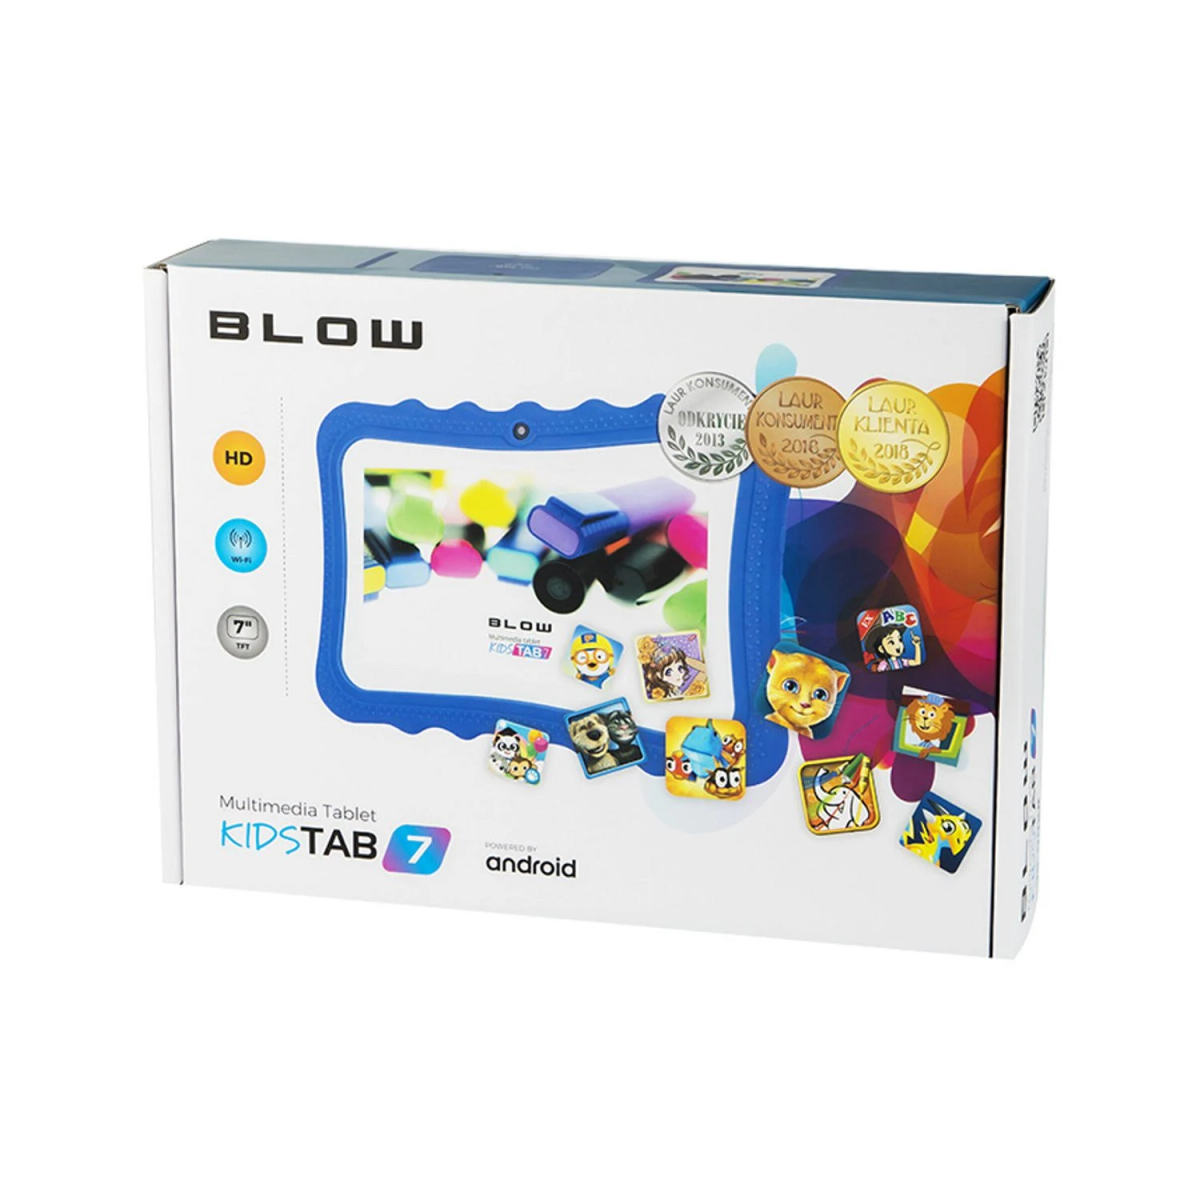 Zoll, GB, KidsTab 2/32 Blau GB, 16 BLOW 7 7 Tablet,